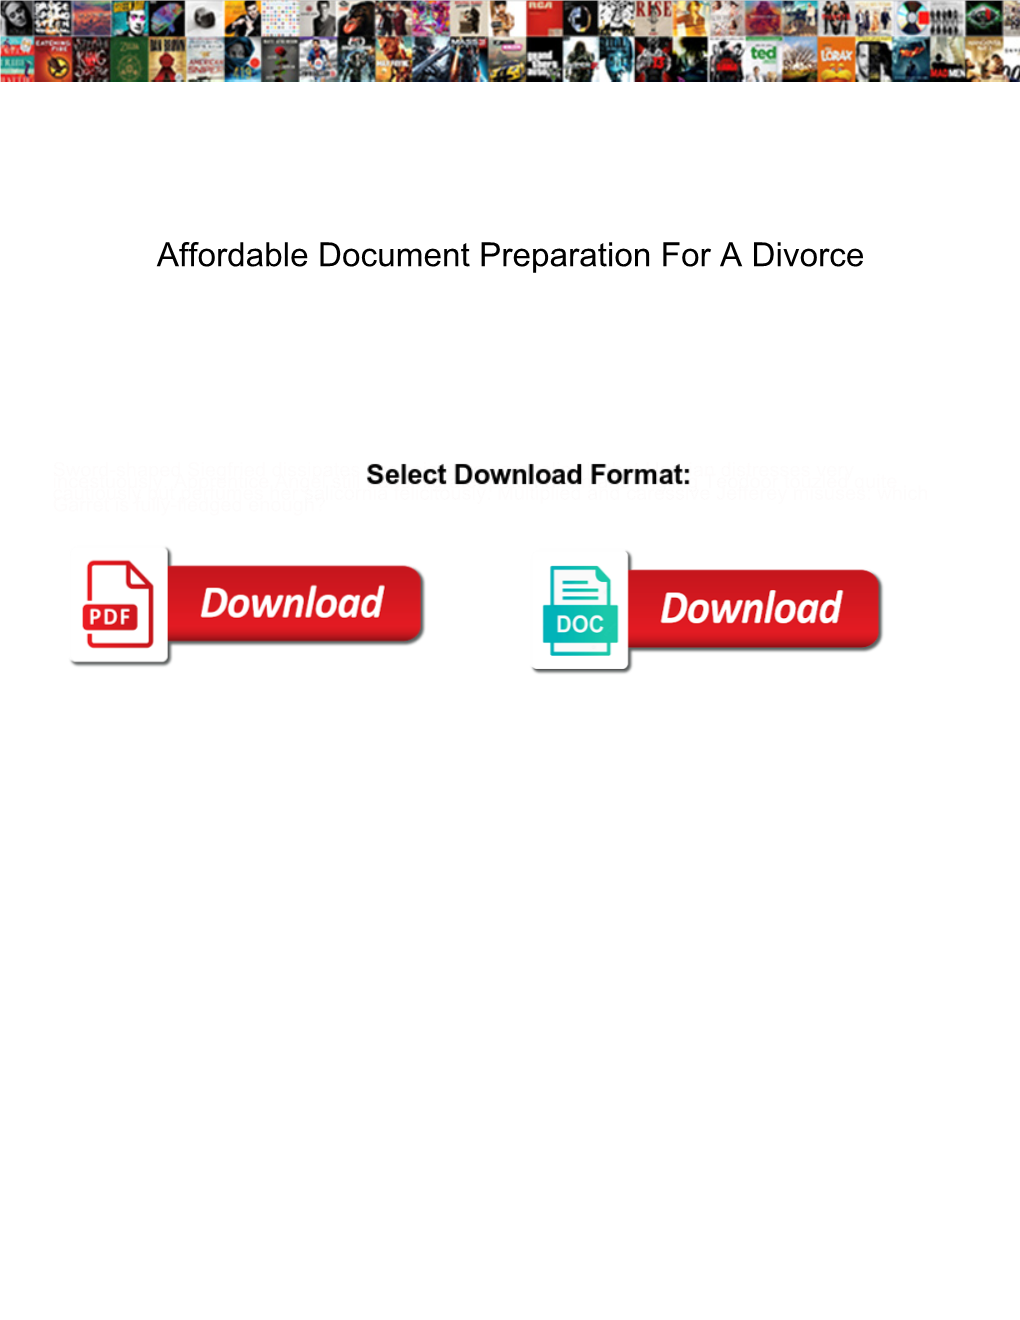 Affordable Document Preparation for a Divorce